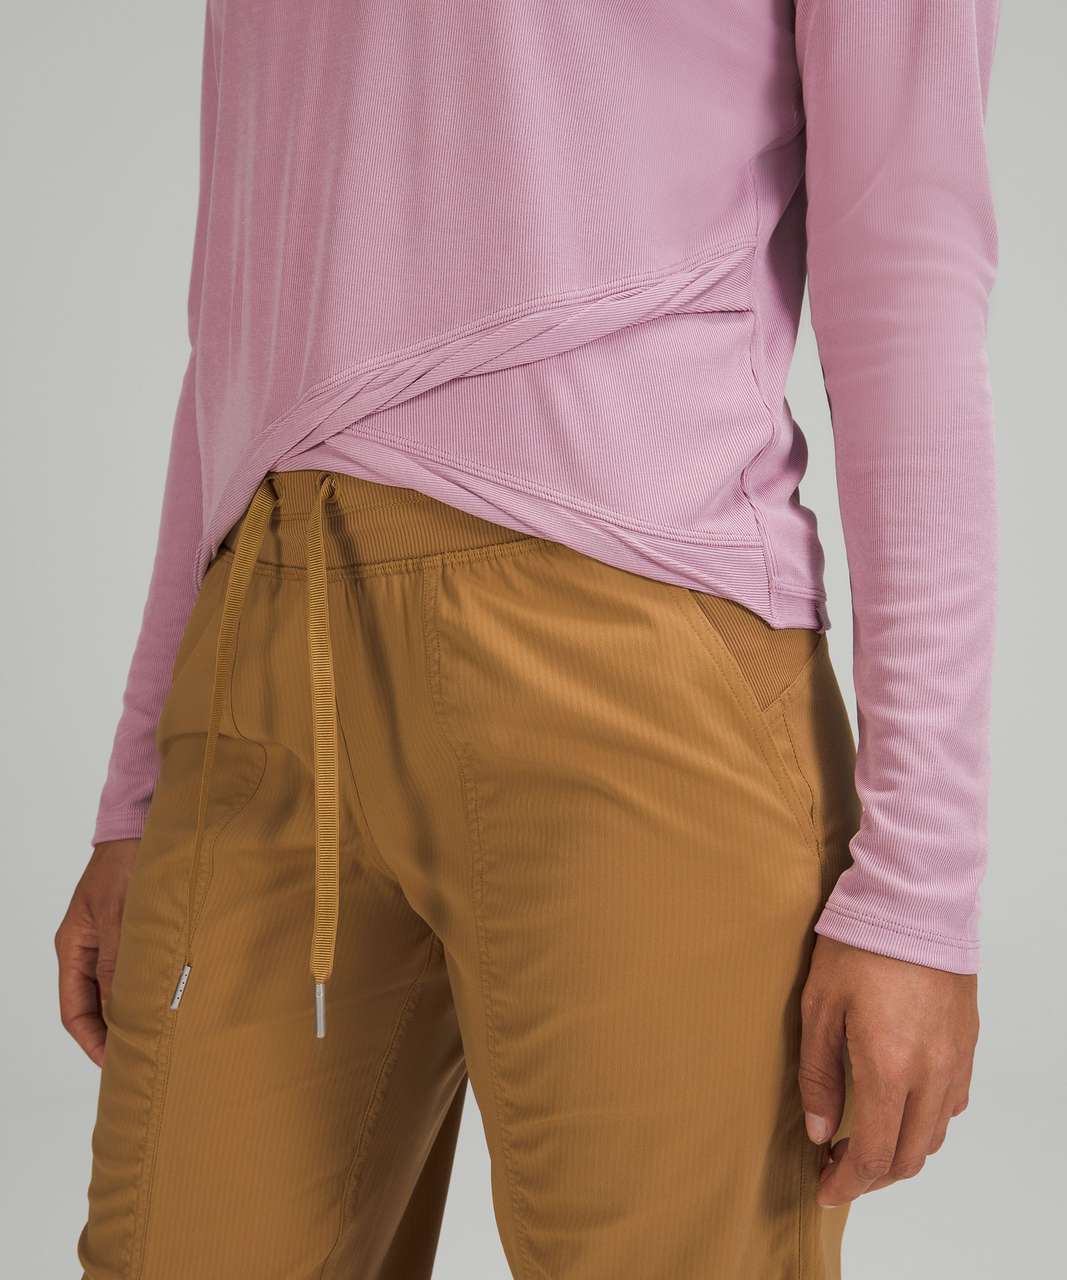 Lululemon Do the Twist Long Sleeve Shirt Pink Taupe Women's Size 4 Ribbed